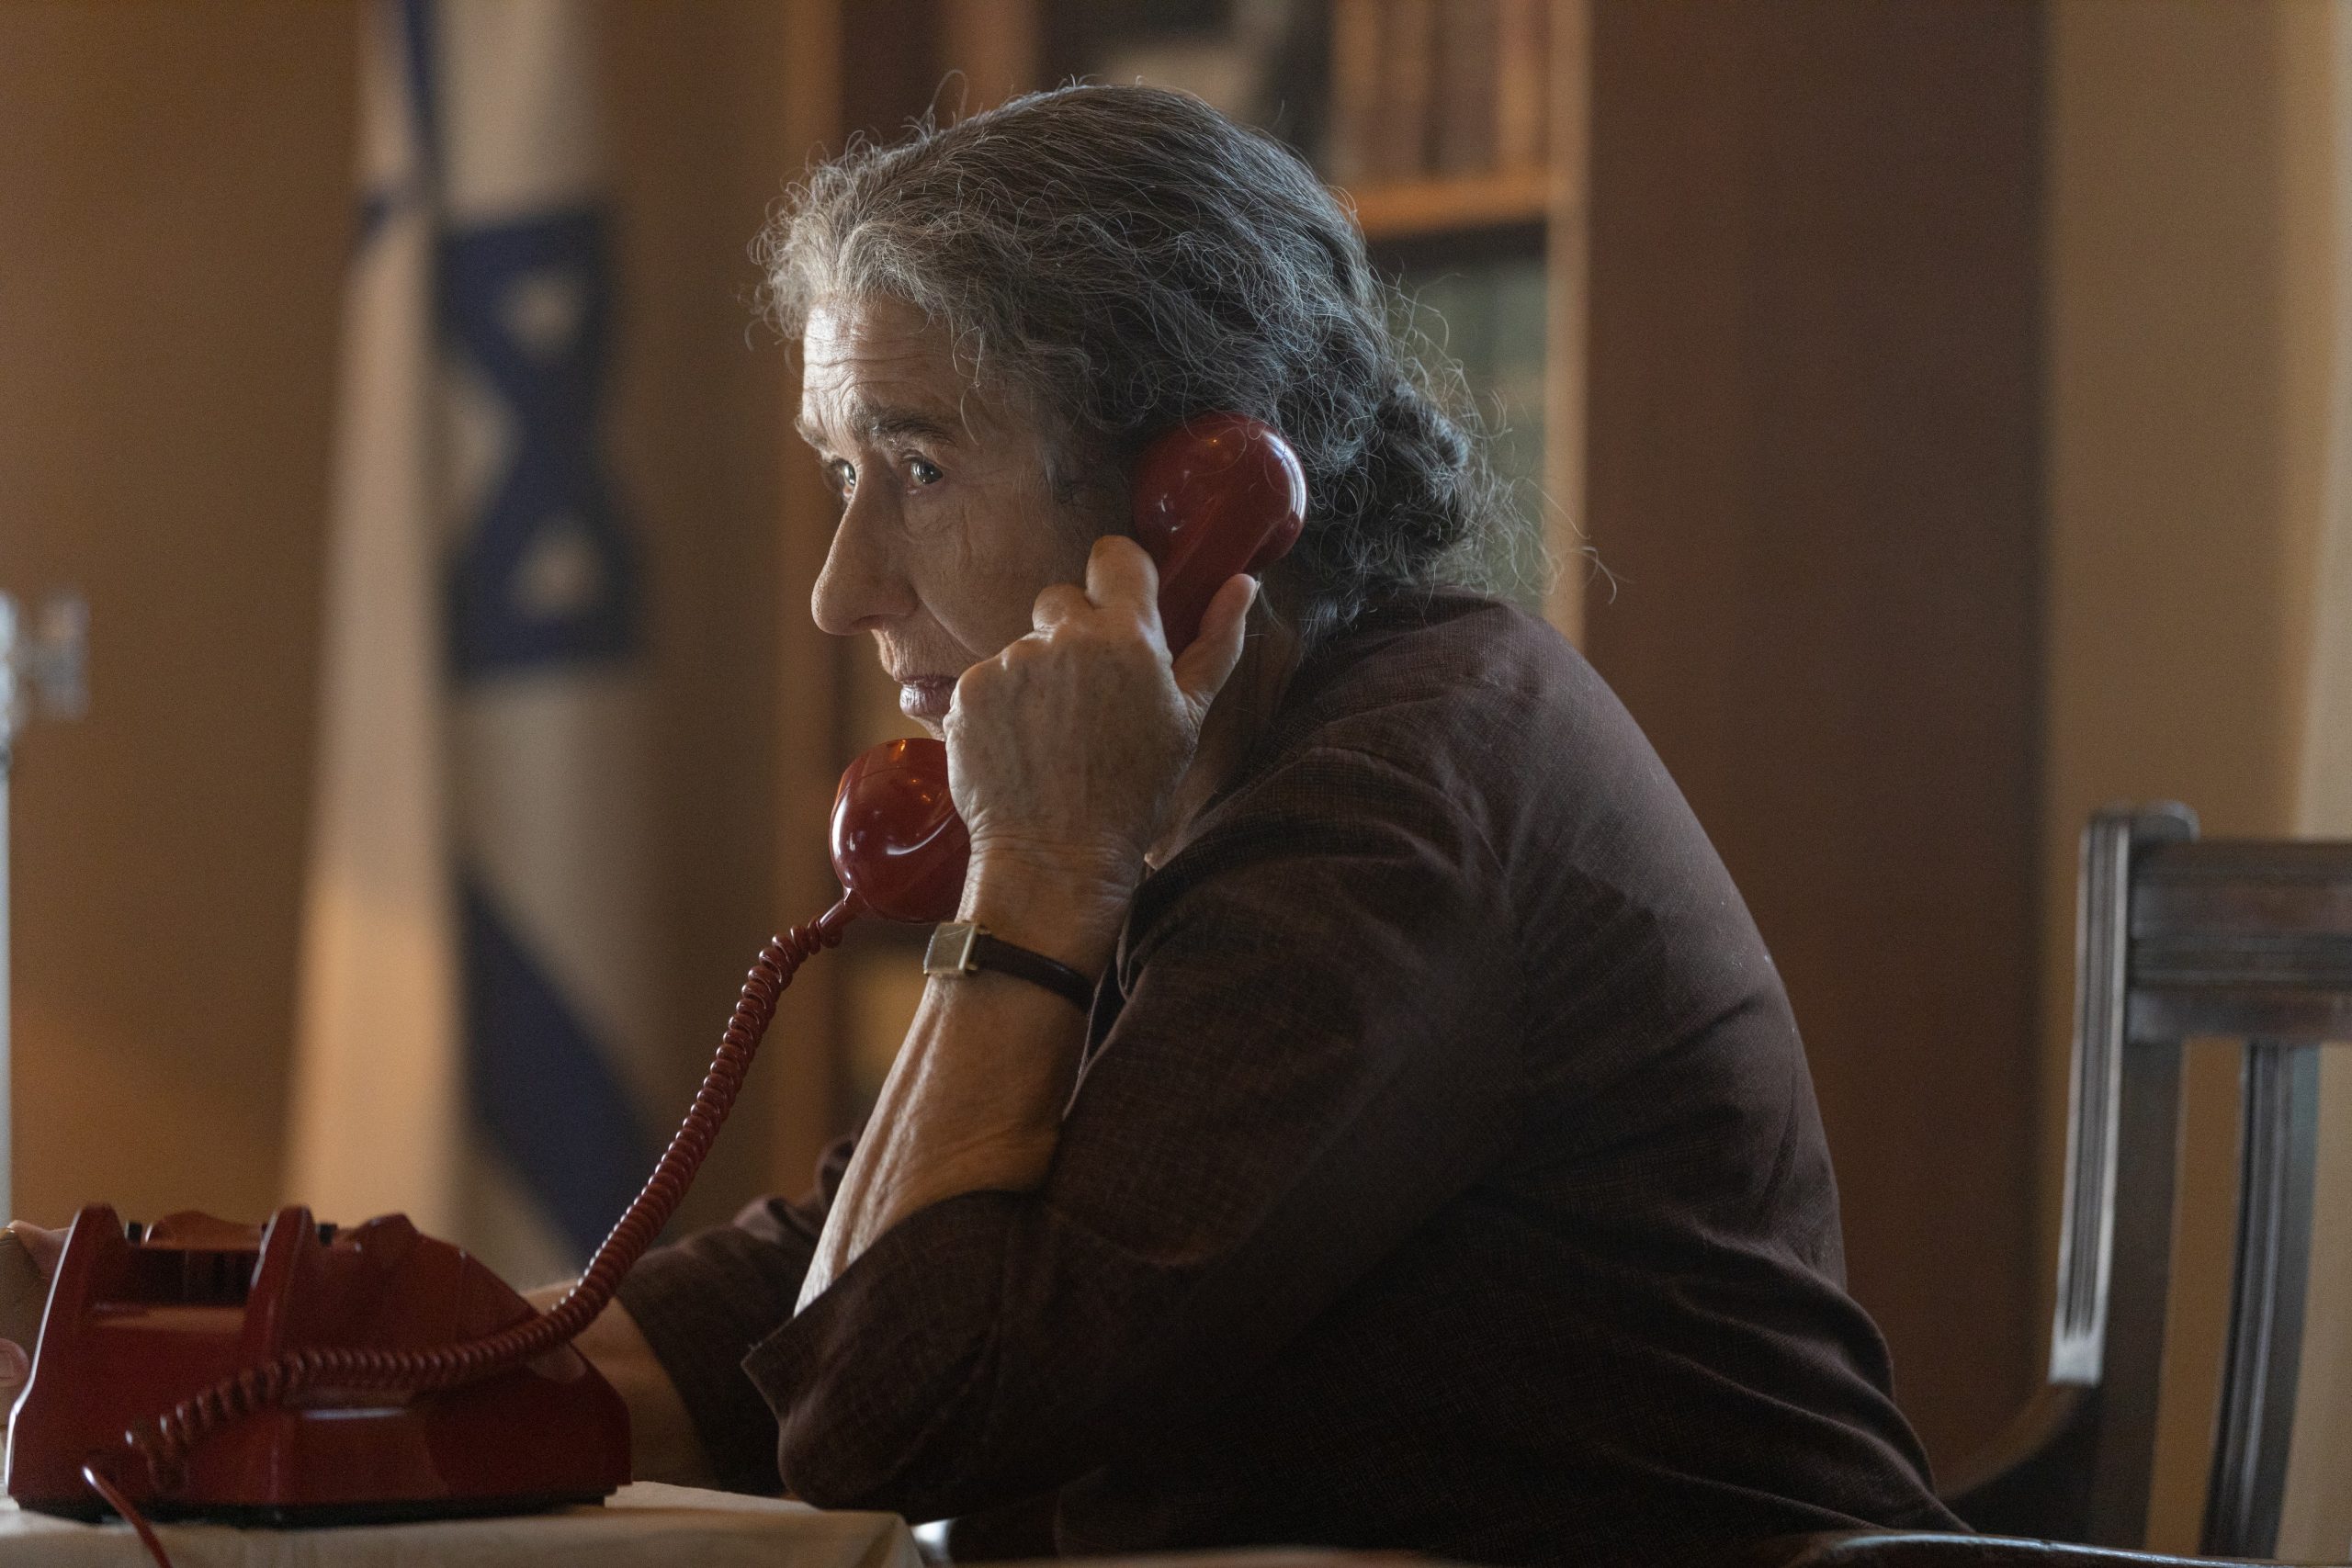 The Golda Meir Movie: Takeaways for Emerging Filmmakers - NYFA